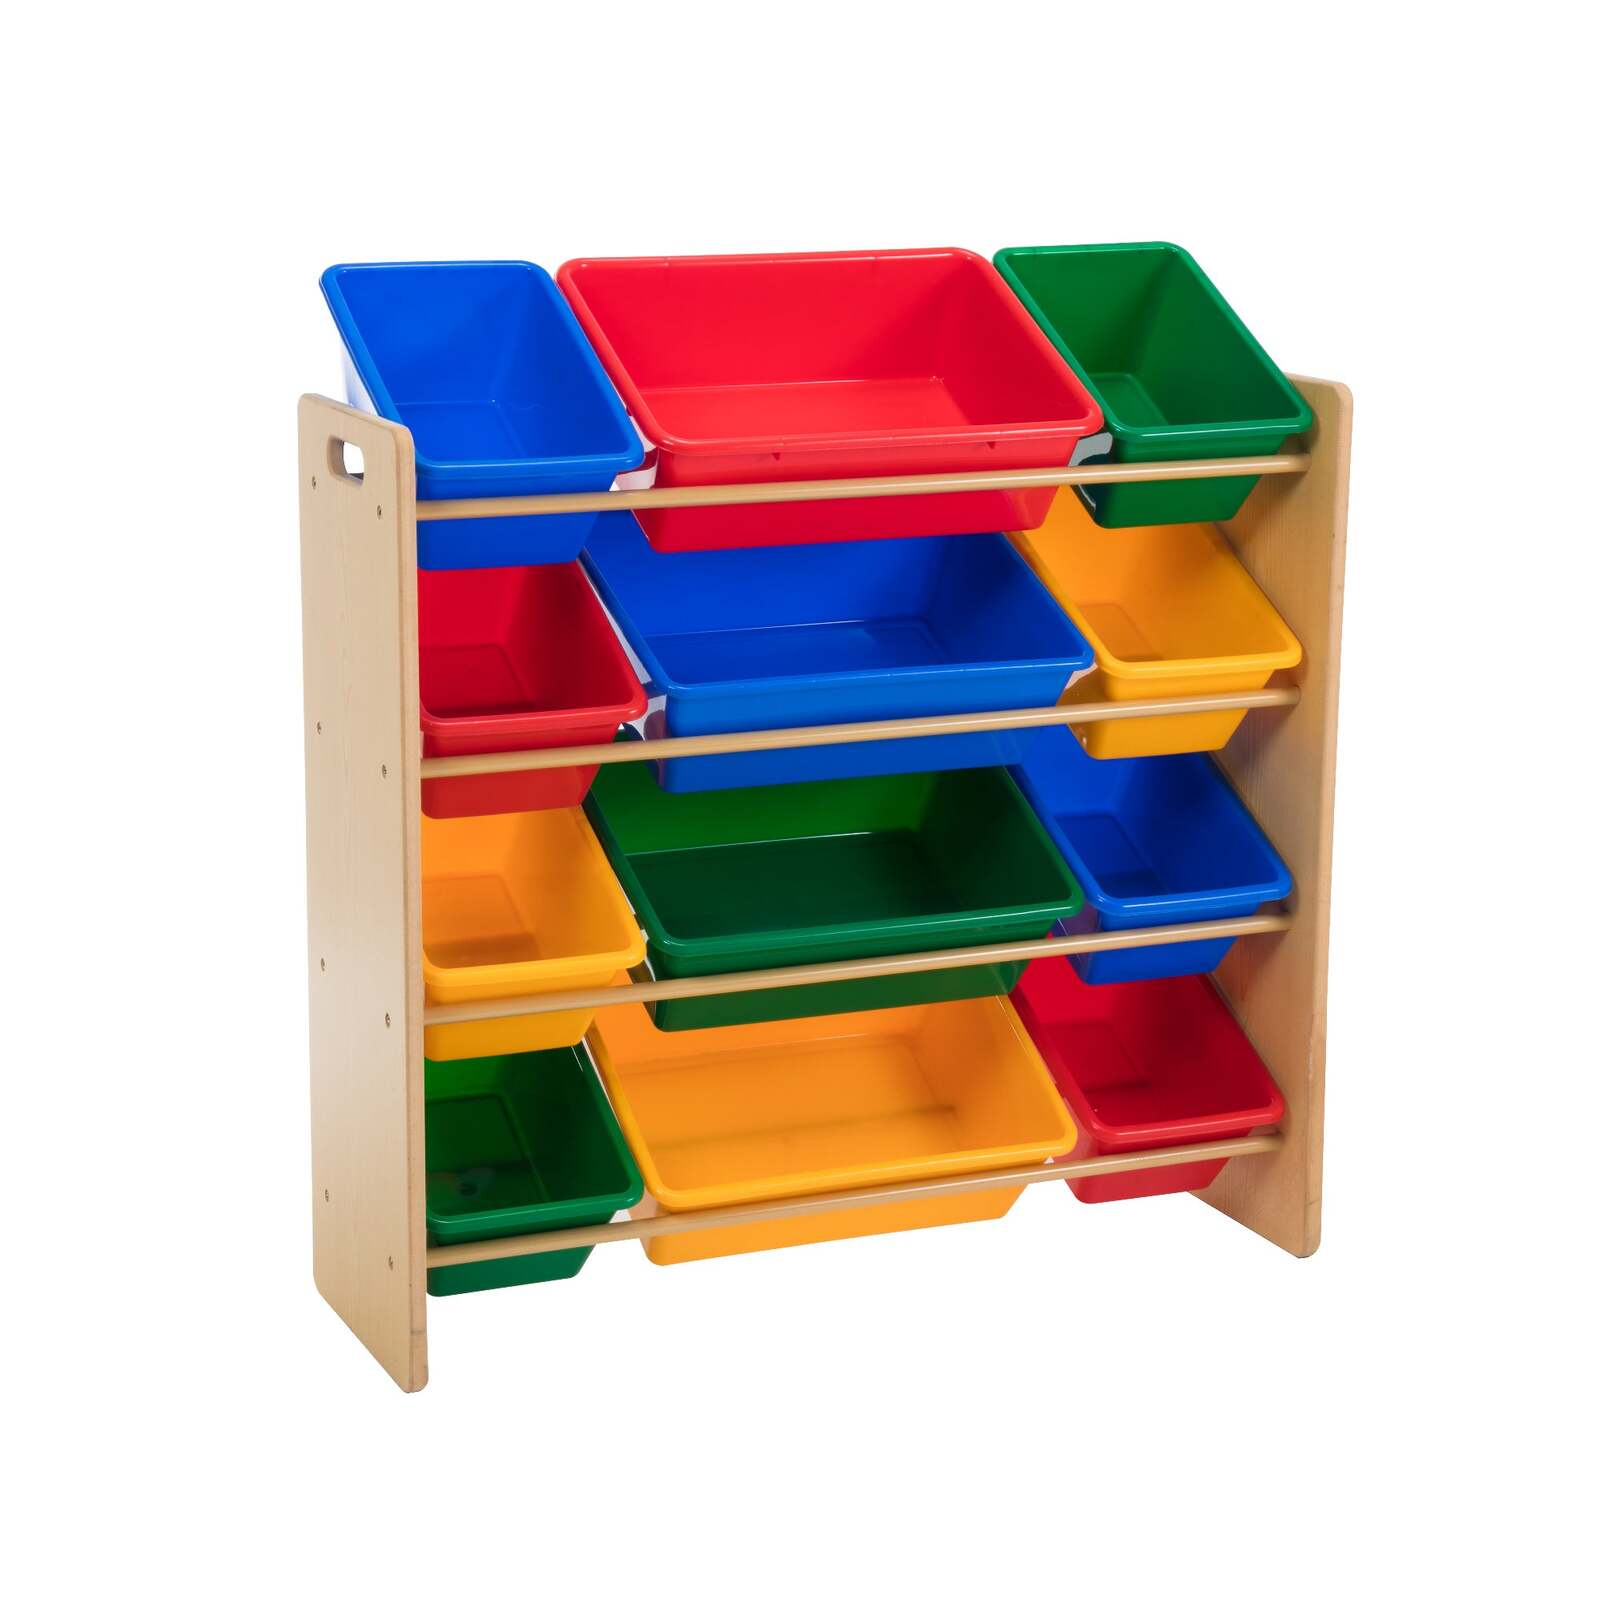 GEM Toys Kids Organiser Shelf Storage Rack for Toys - 12 Multicoloured Bins